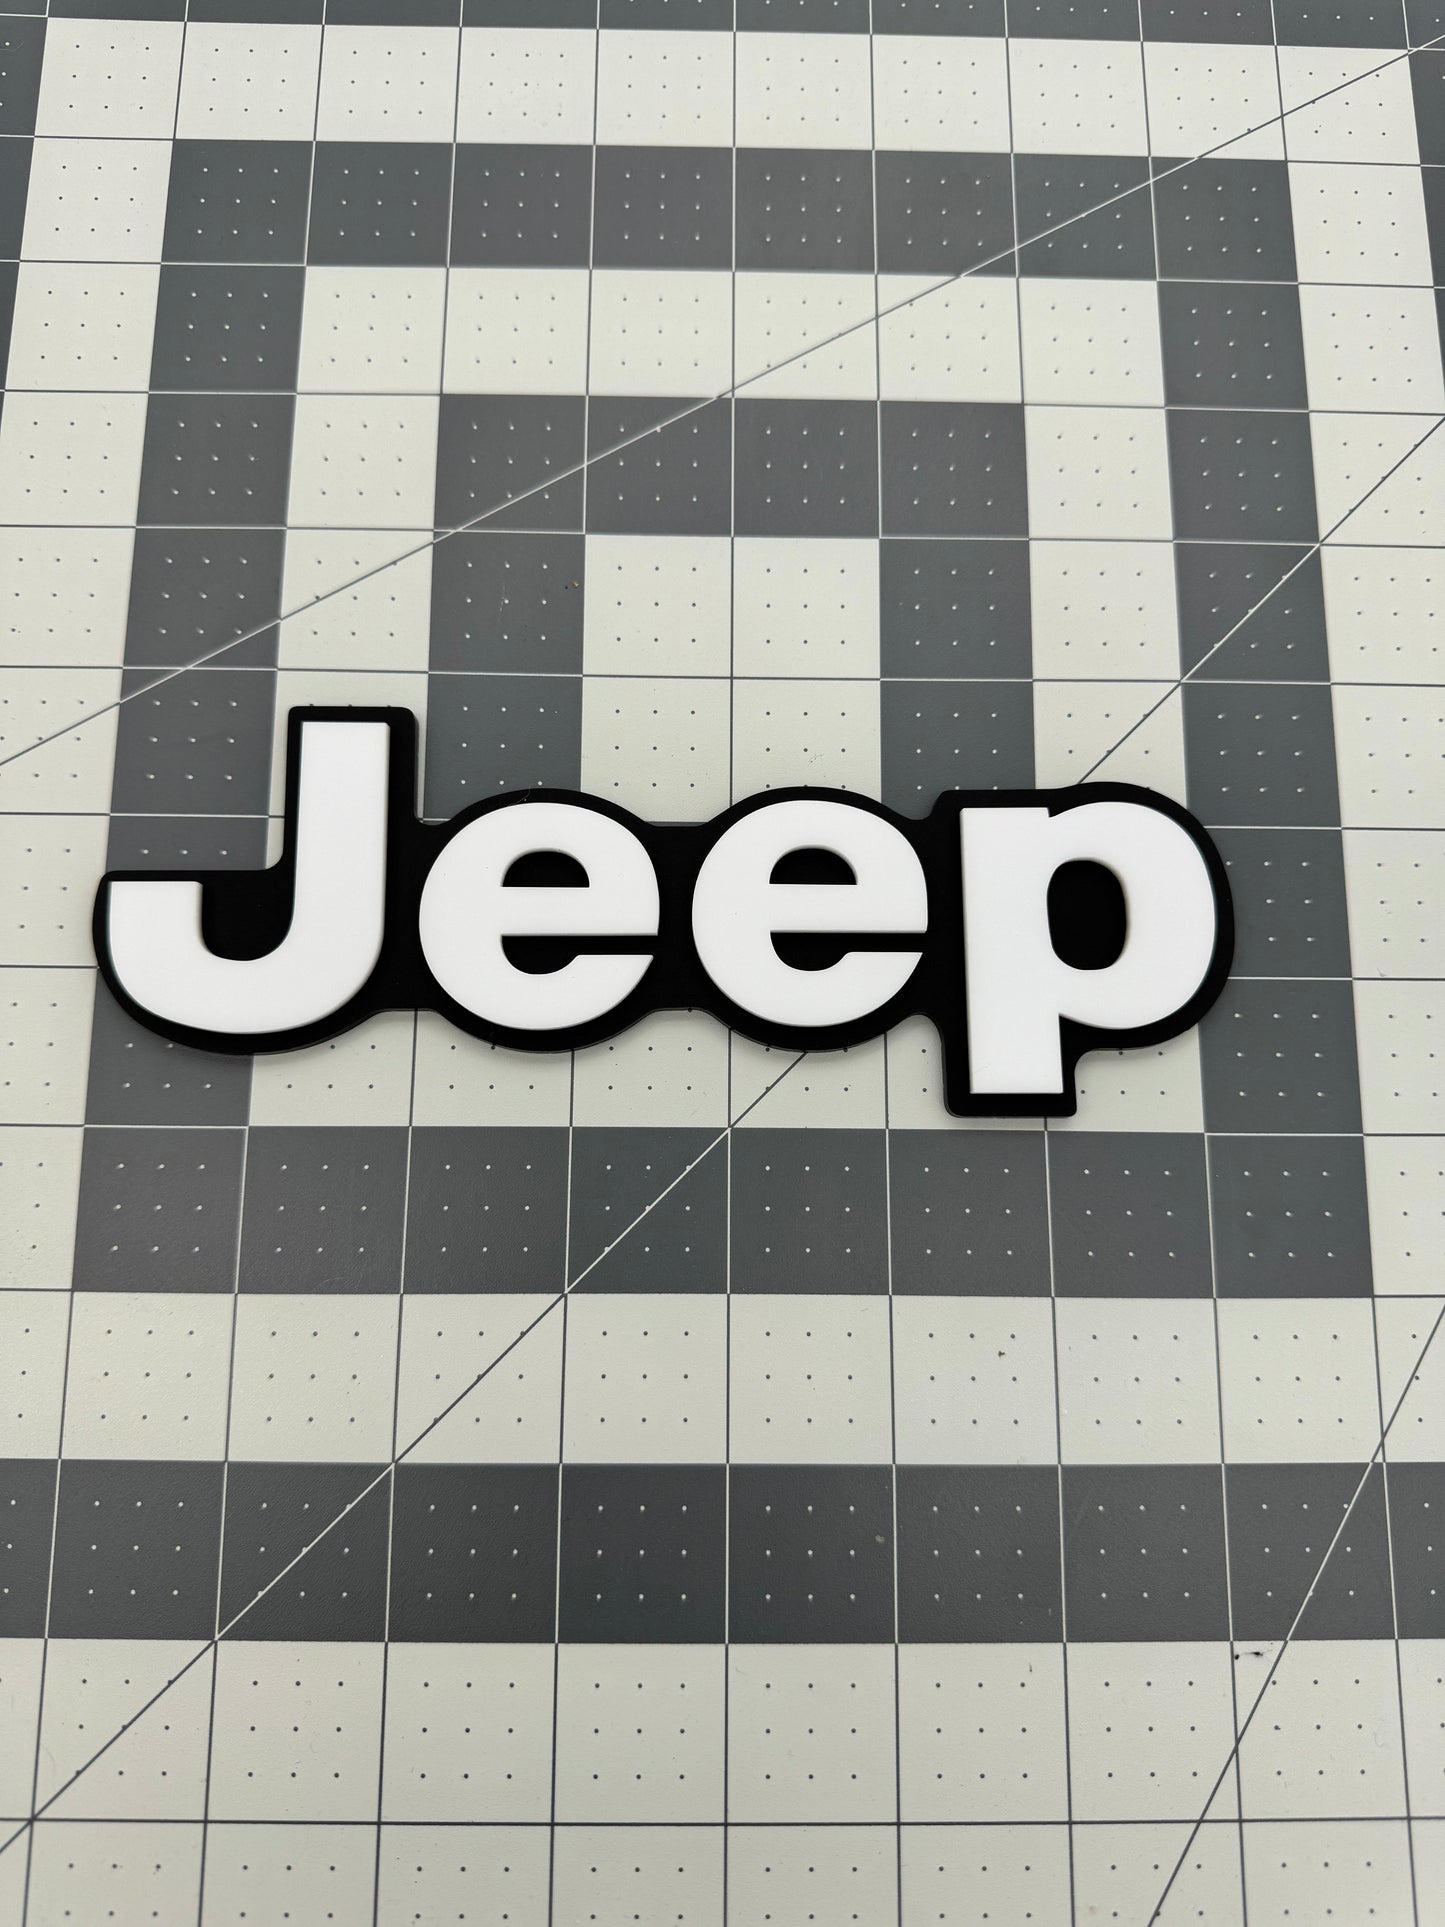 Jeep Grand Cherokee rear badge